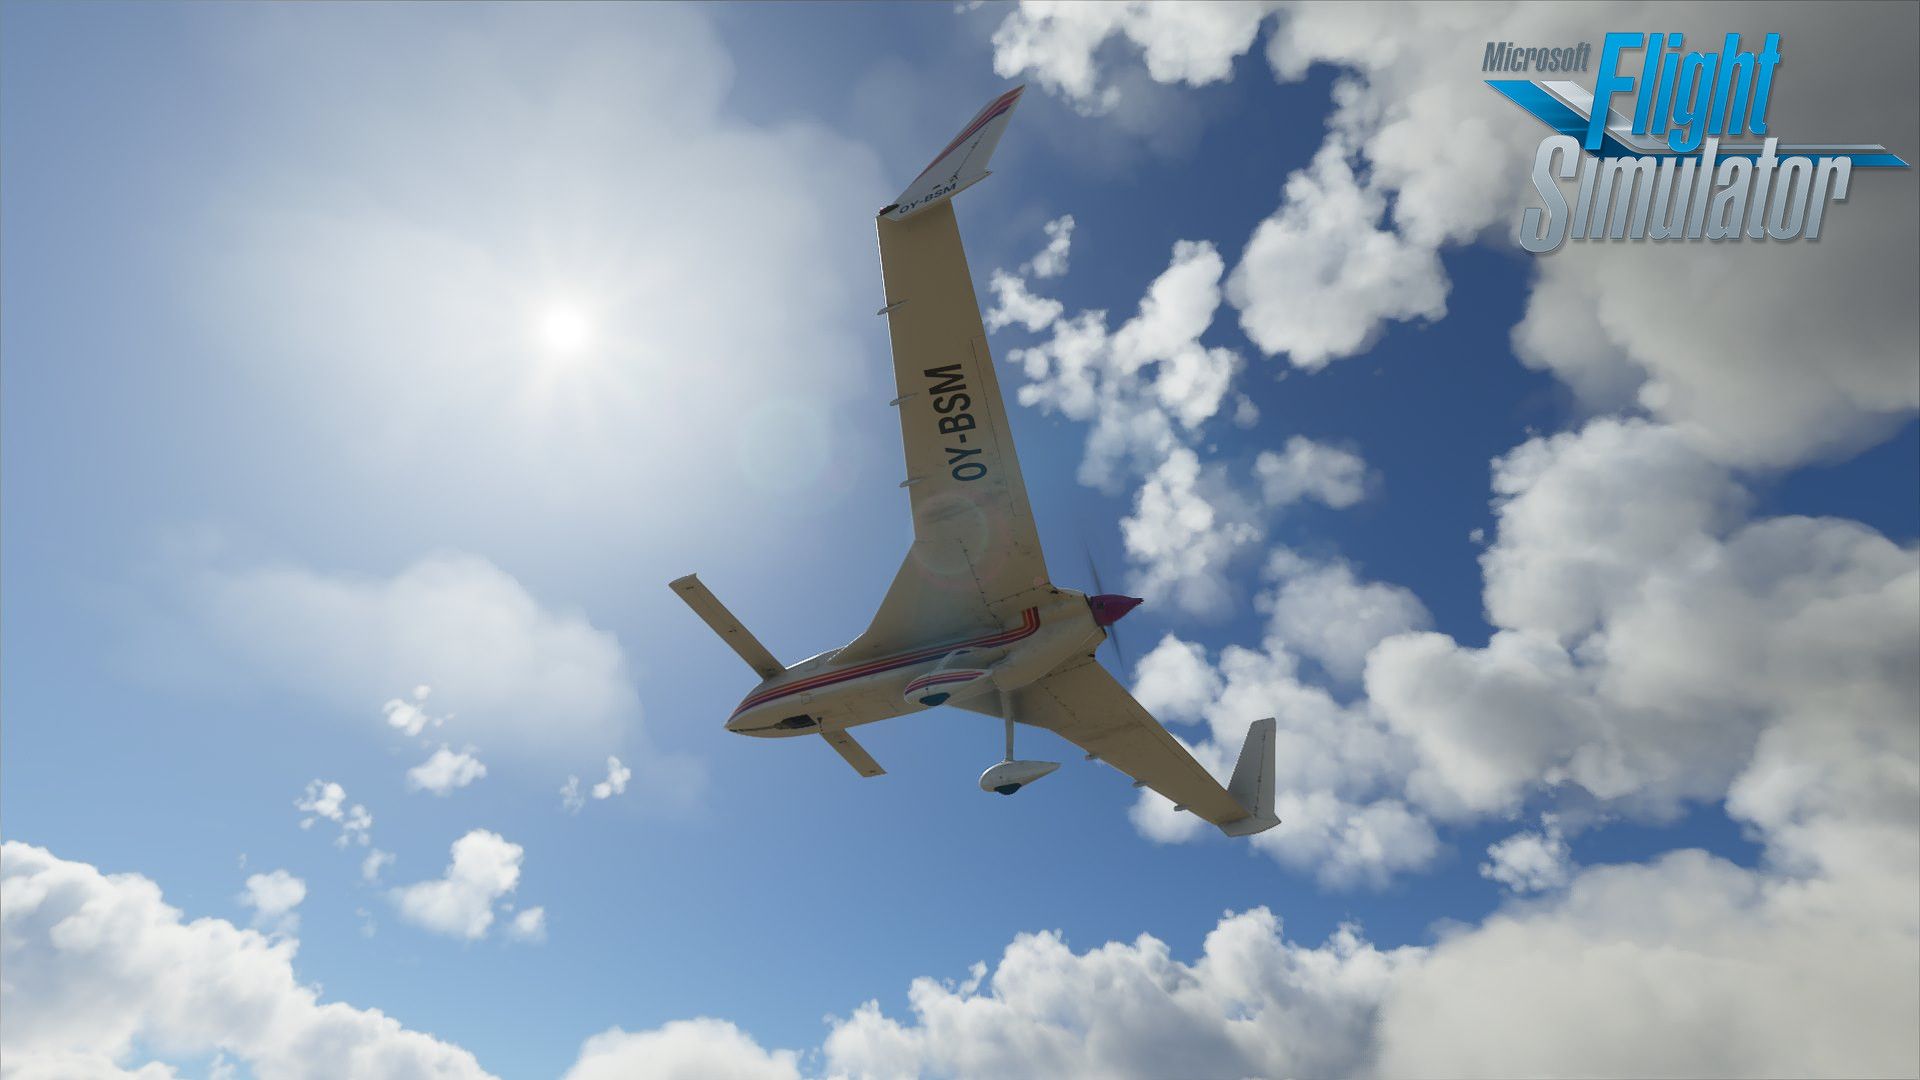 buy microsoft flight simulator 2015